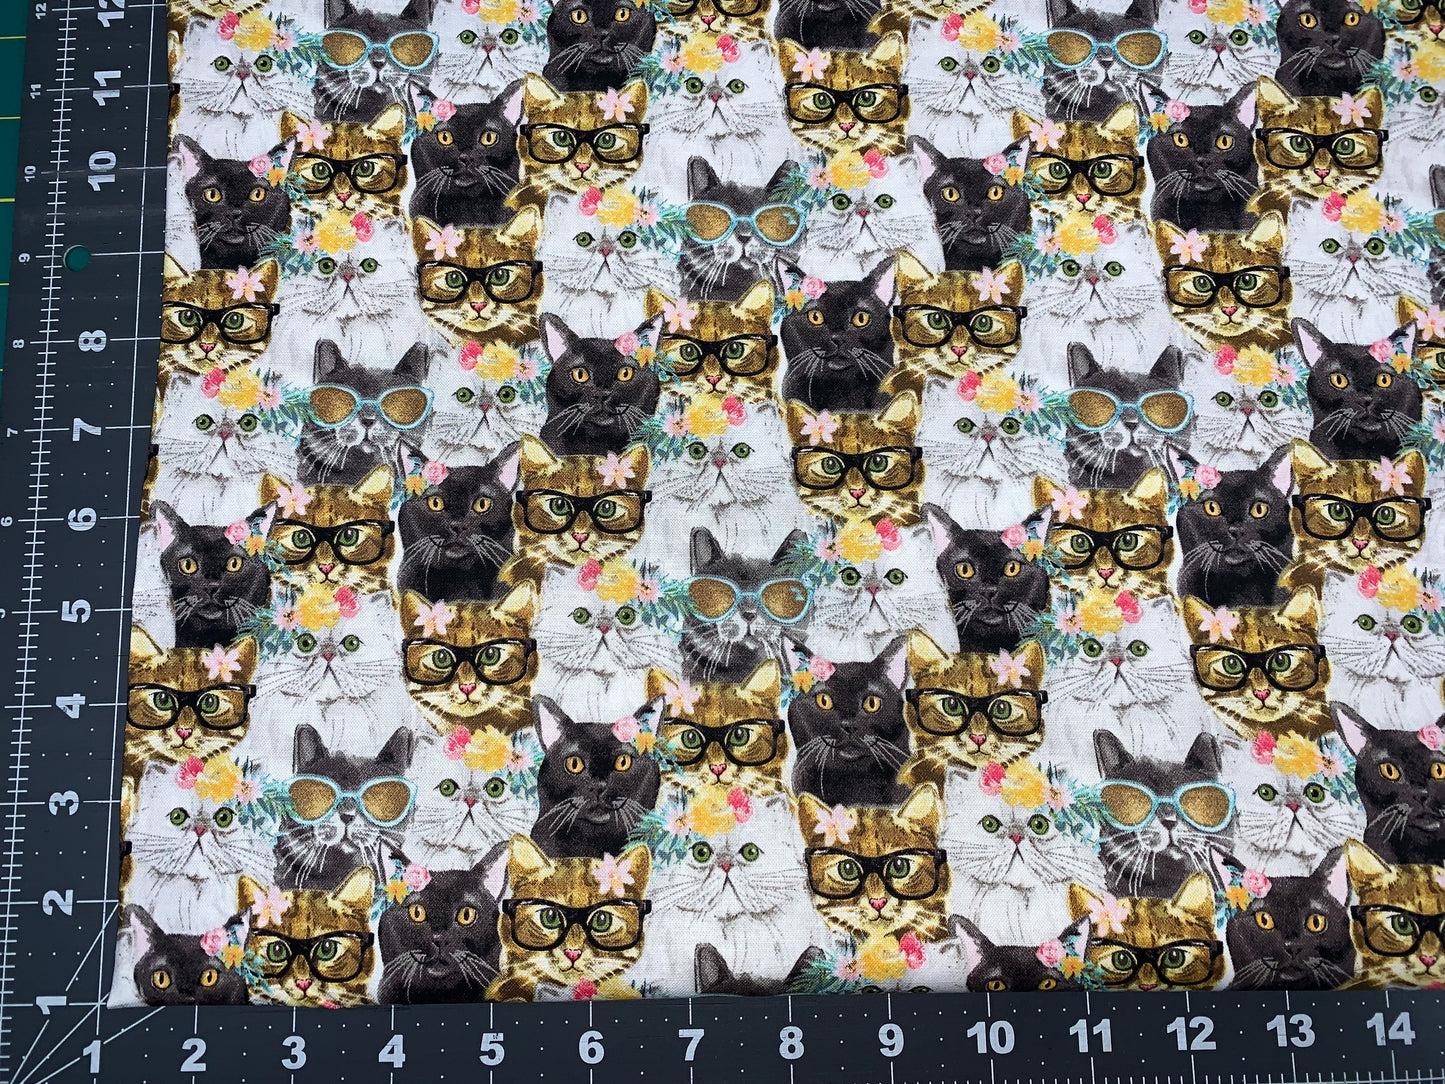 Caturday Cats in Glasses 18040 cat fabric